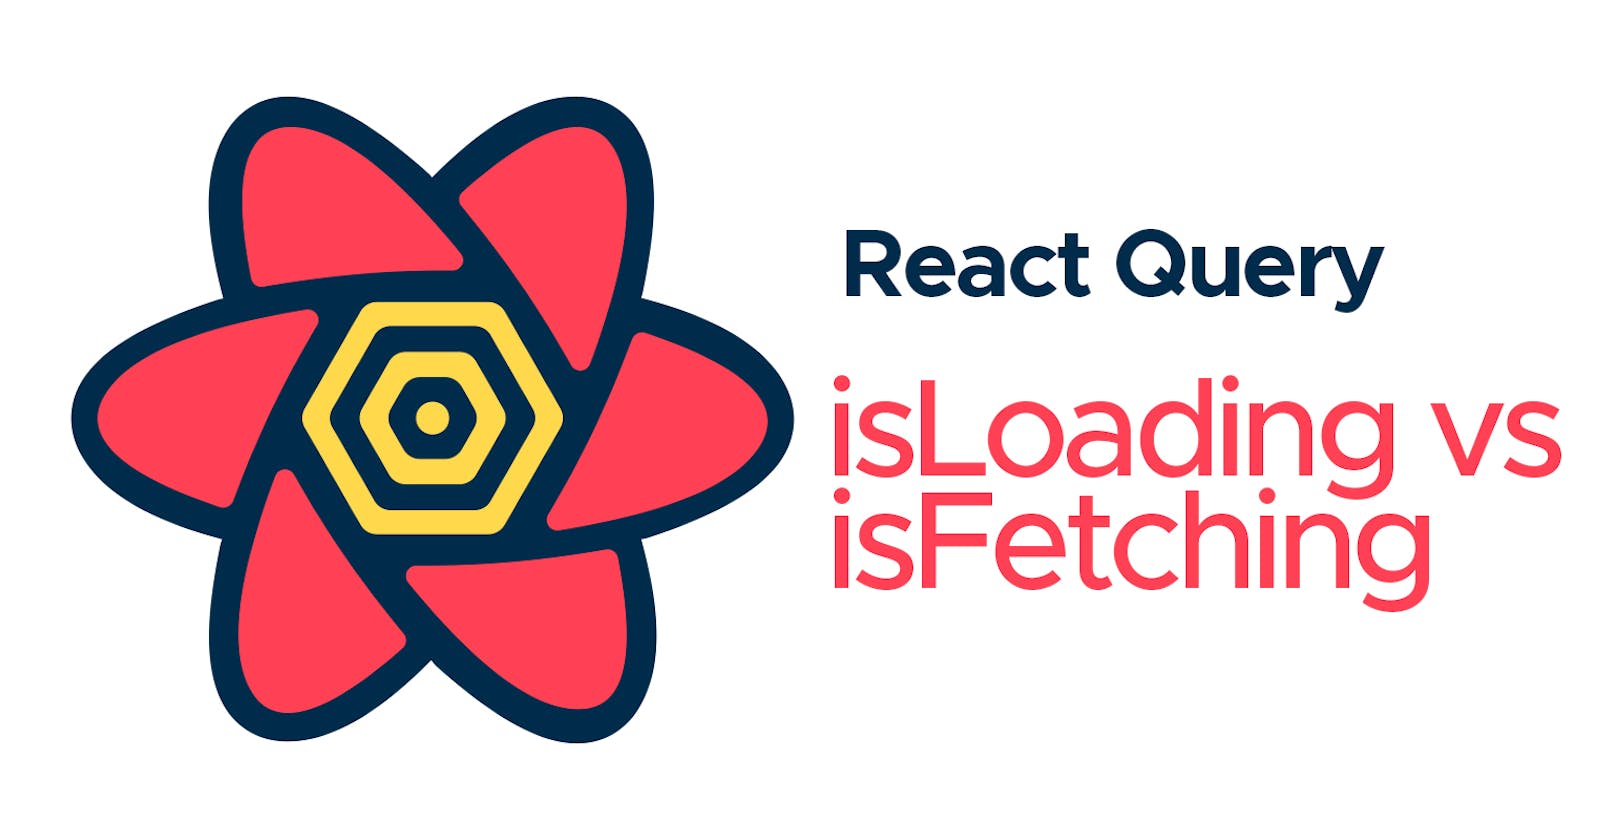 React Query (Fetching vs Loading)